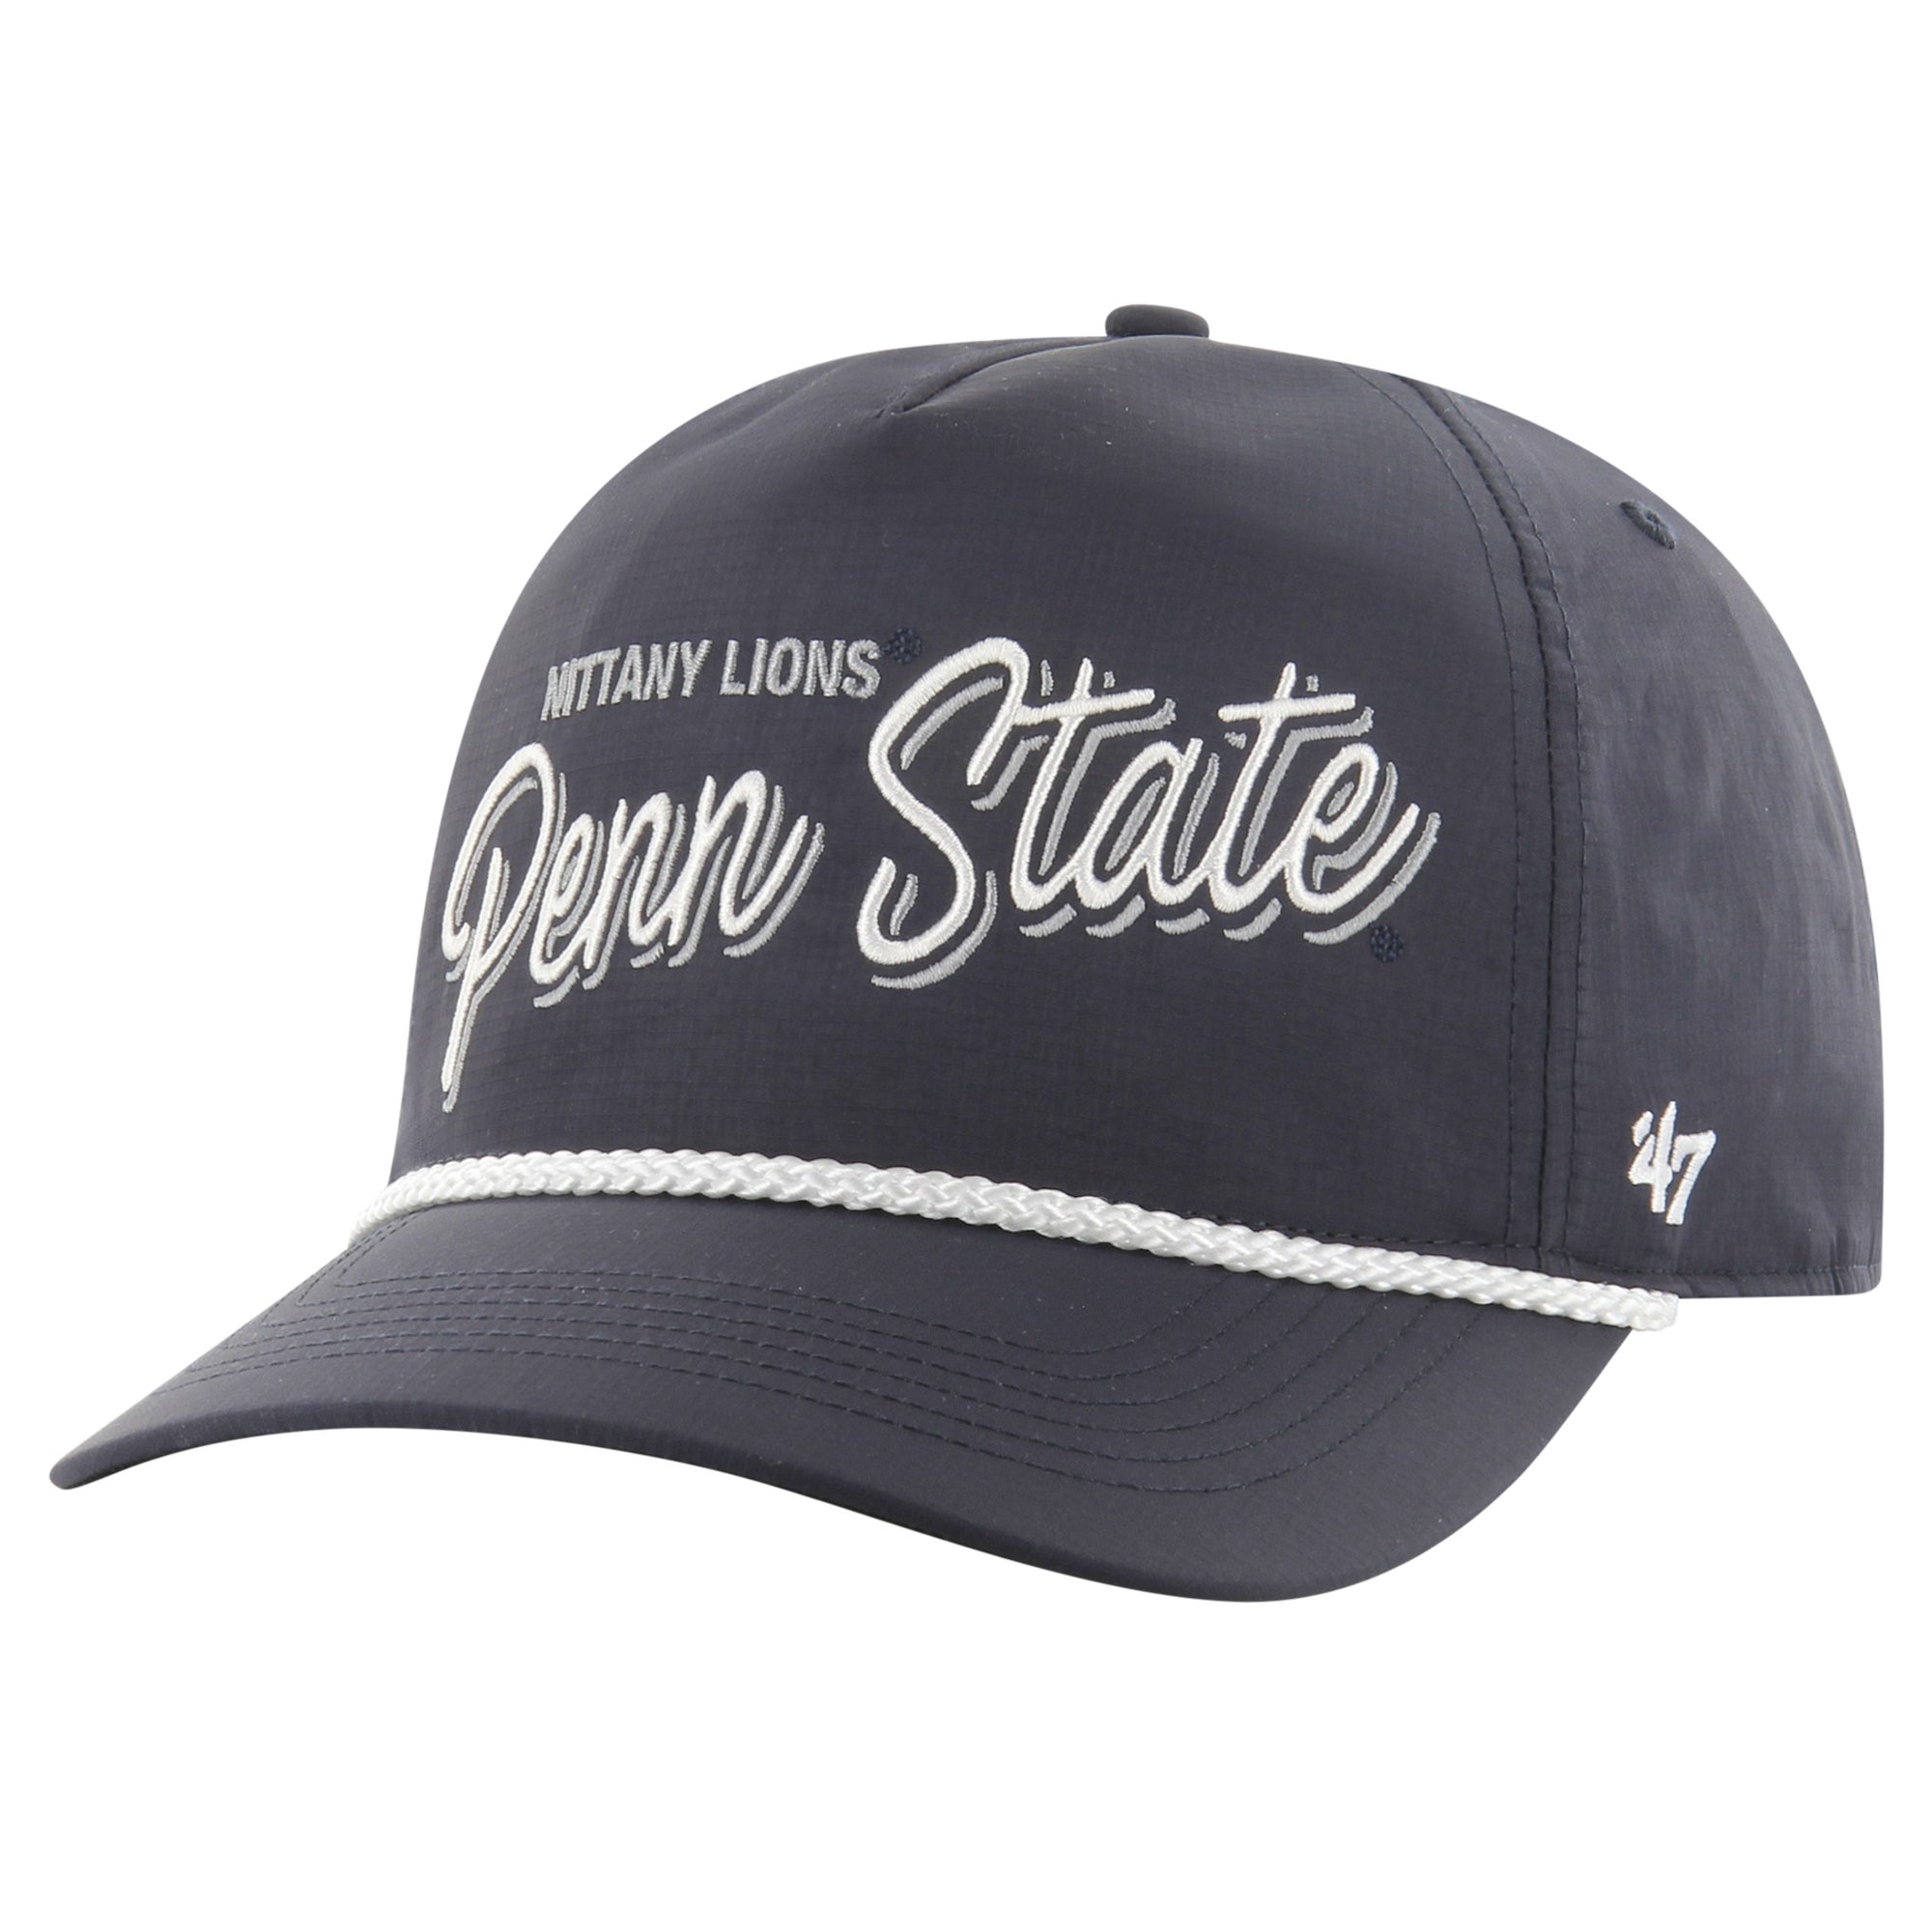 Lids Penn State Nittany Lions '47 Crossroad MVP Adjustable Hat - Cream